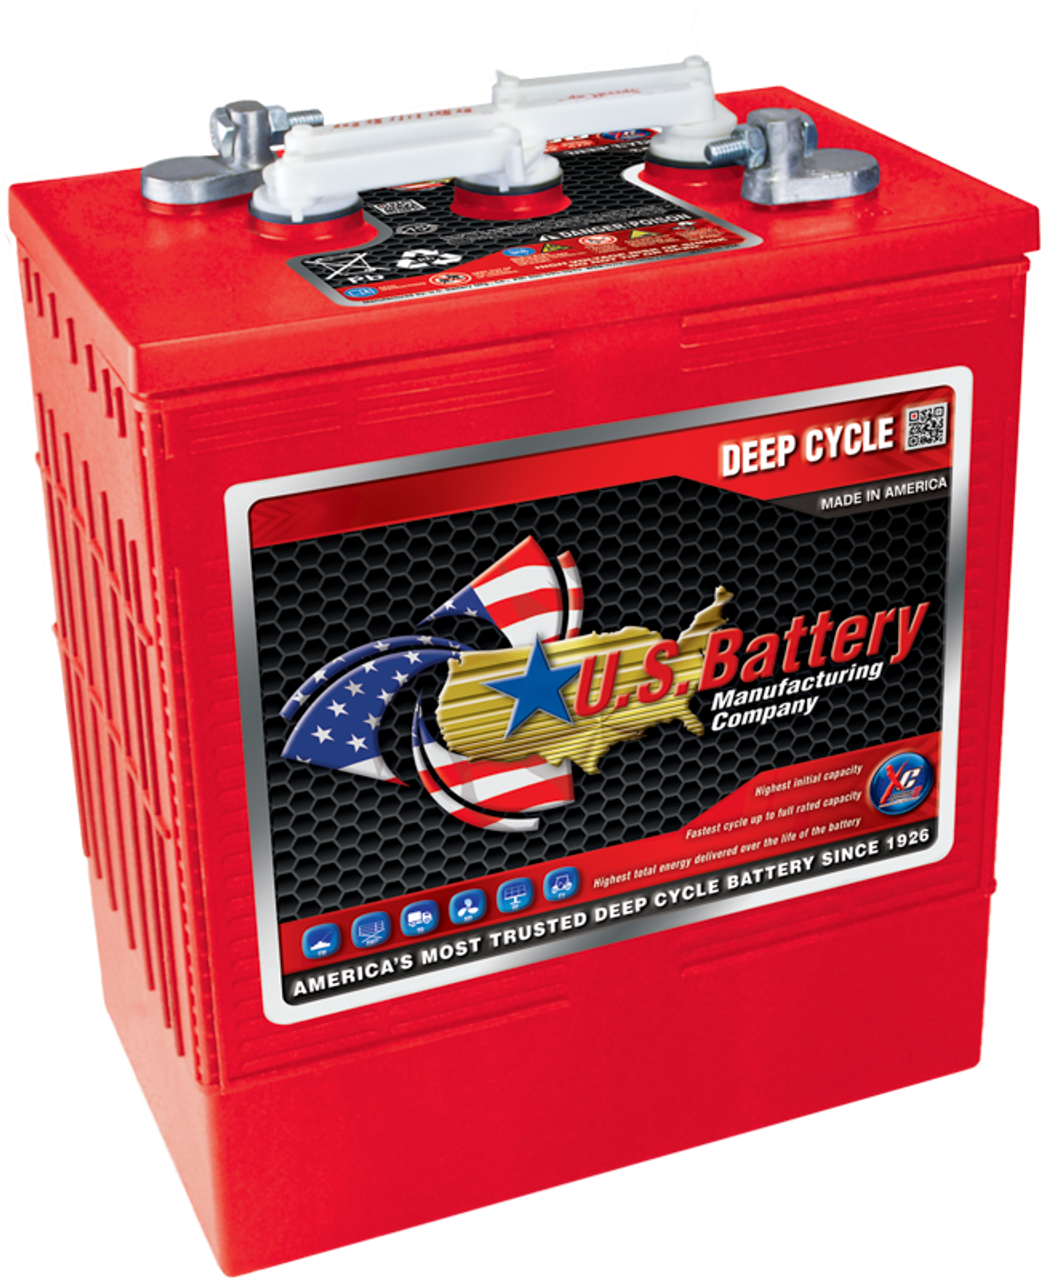 Group 902 6V US305HCXC2 U.S Battery Deep Cycle Battery